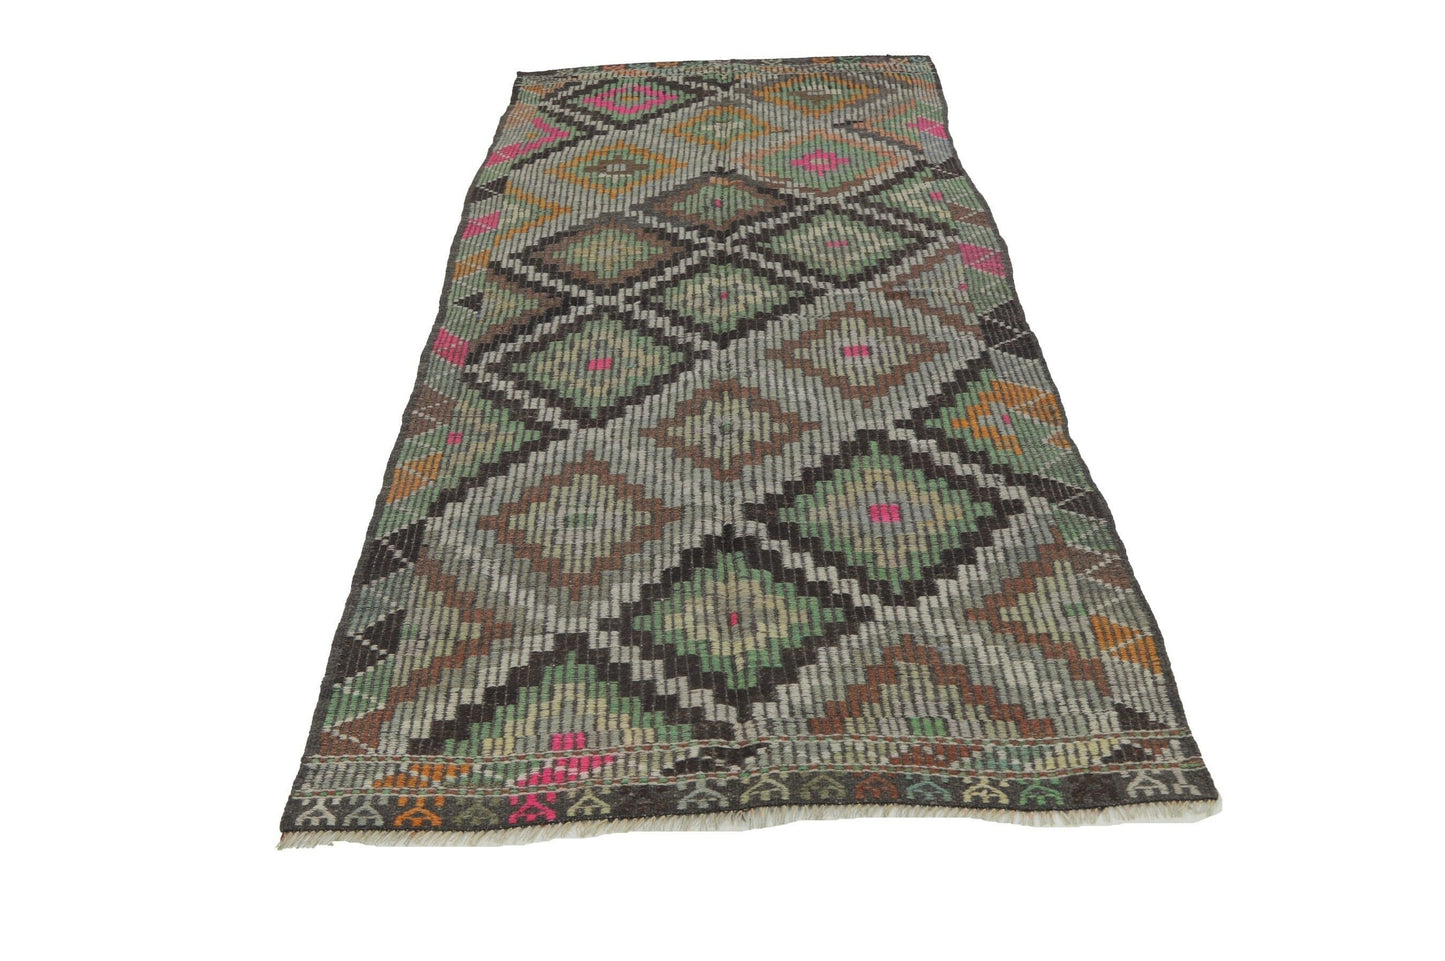 Long Wide Kilim rug,Handmade Decorative Wool Runner Kilim Rug 6x10 ,Entryway One of a kind Vintage Turkish Kilim rug,Anatolia rug,8118